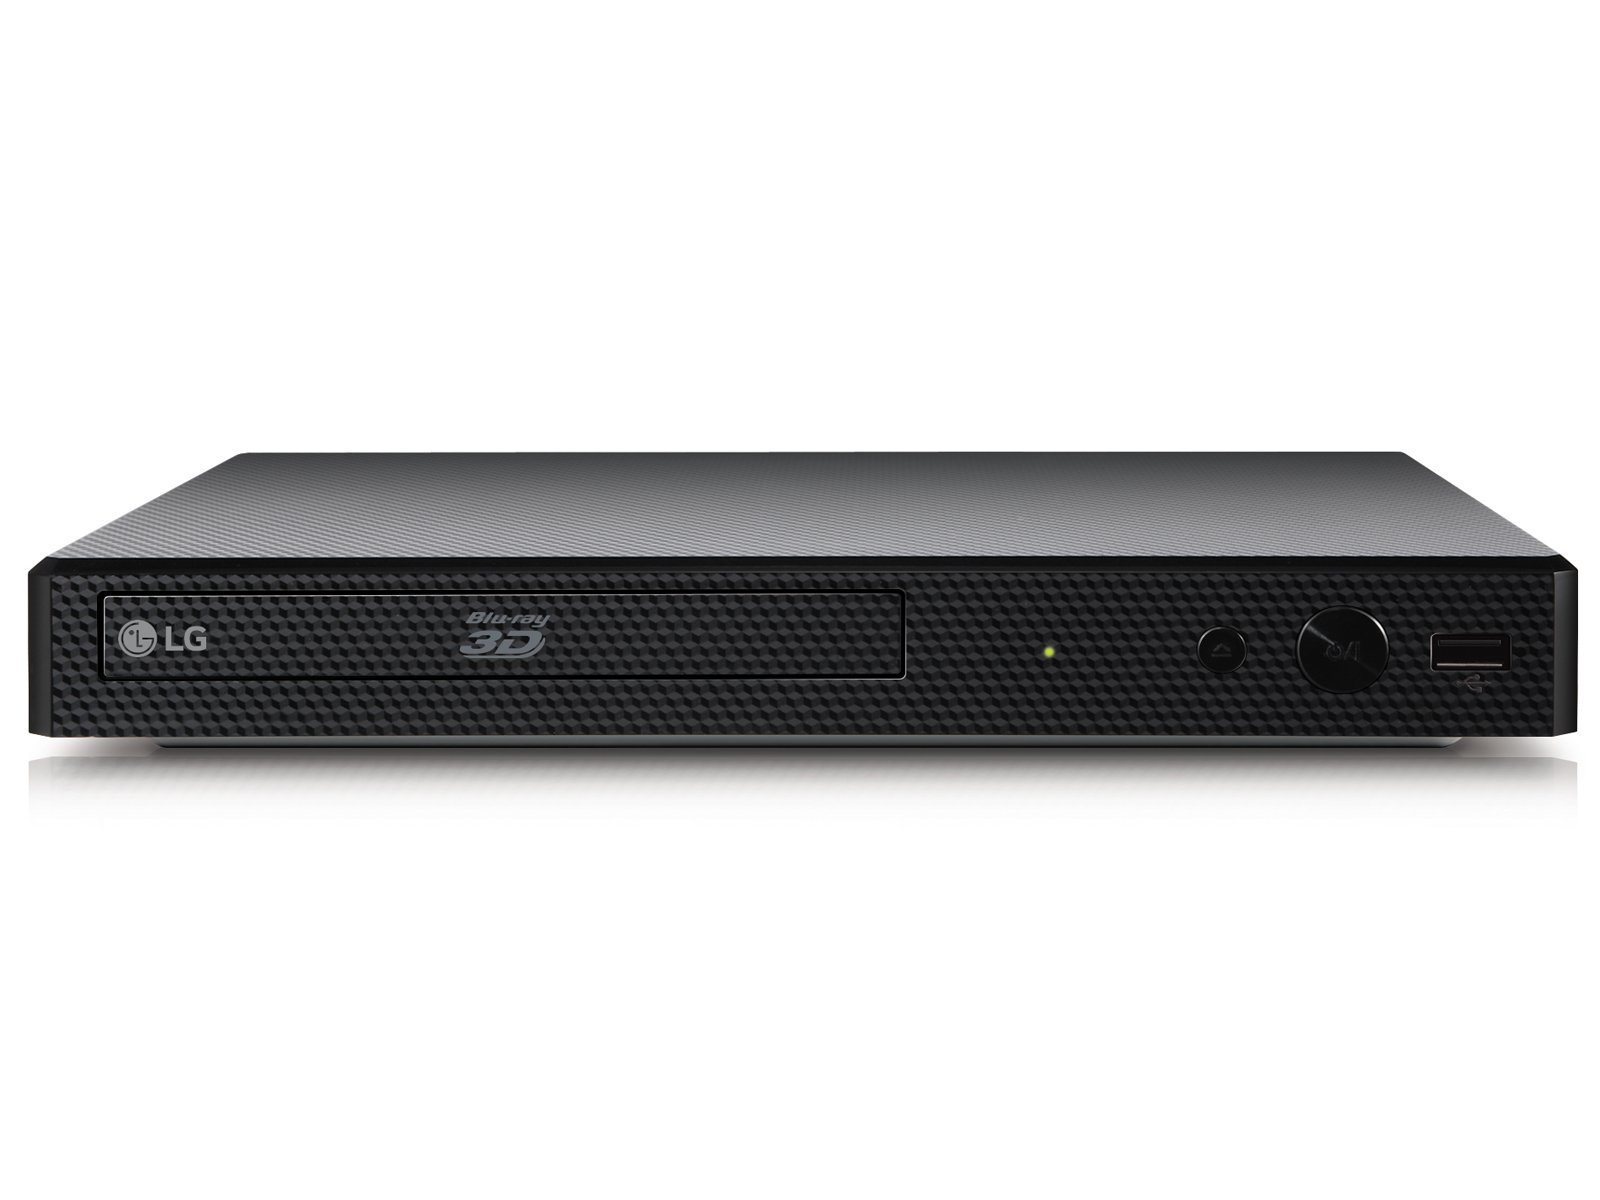 LG BP450 3D Blu-ray Player (Smart TV, DLNA, Upscaler 1080p, LAN, USB) schwarz